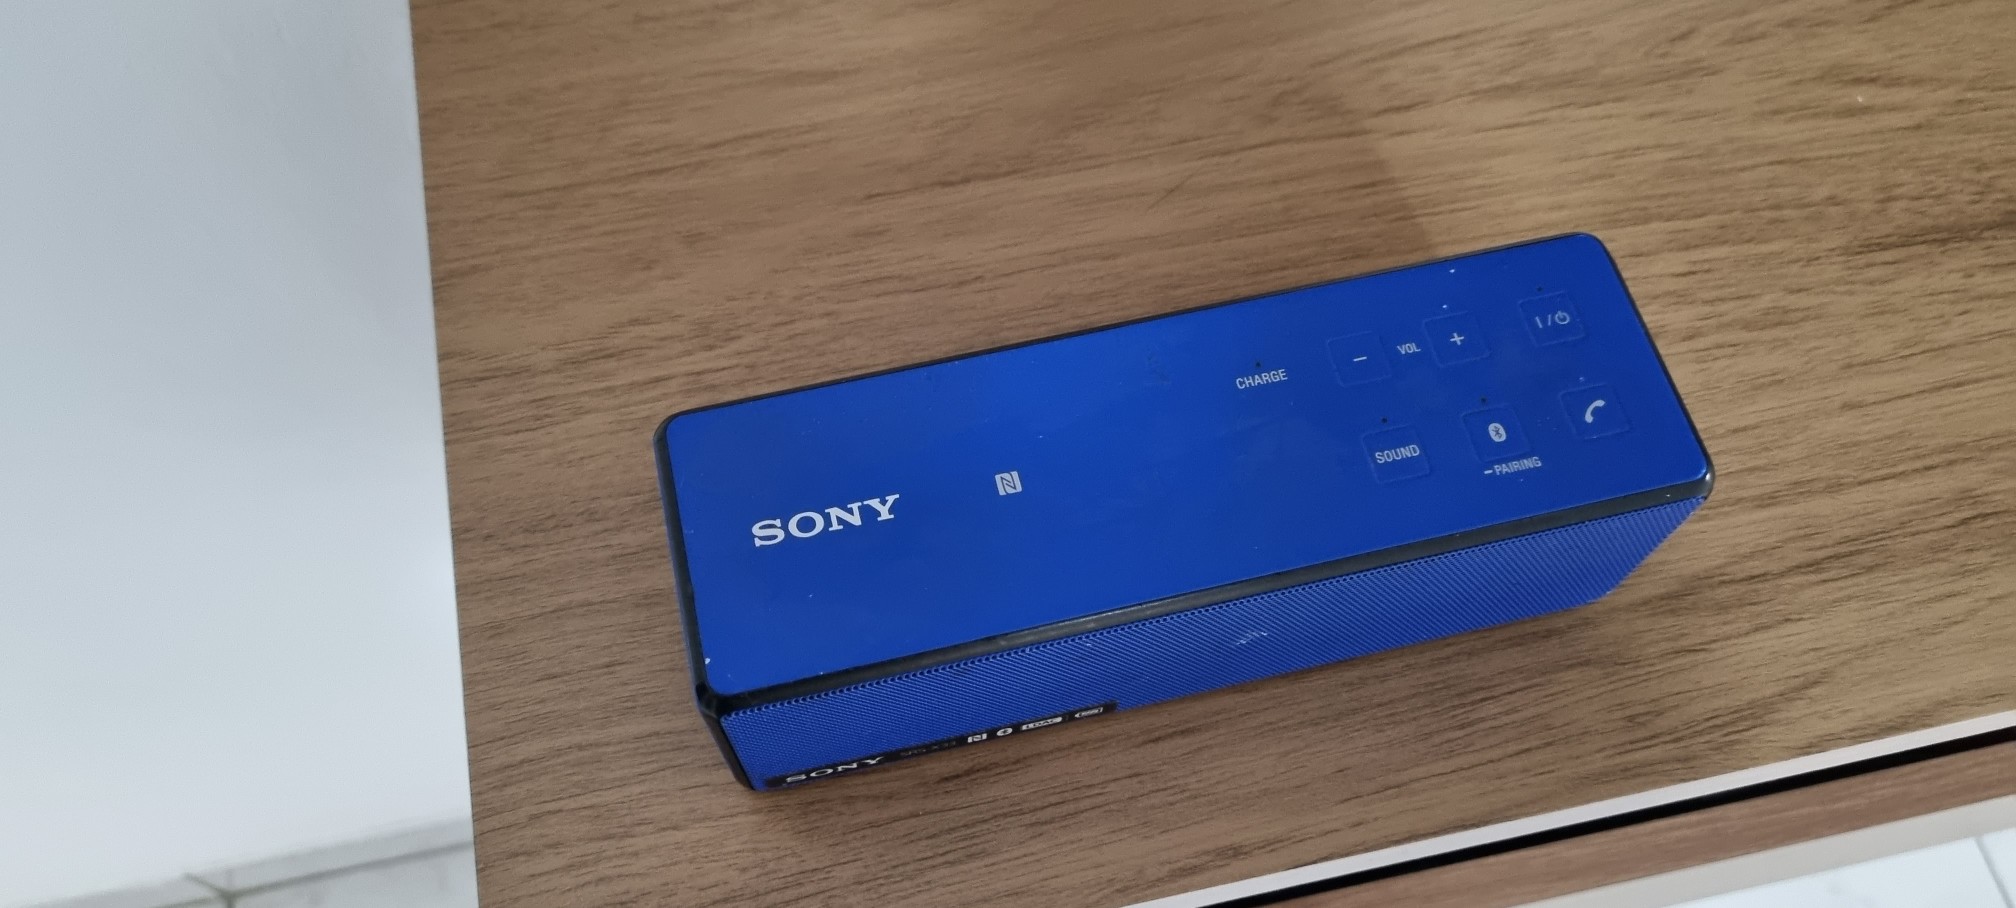 camaras y audio - Bocina inalambrica Bt Sony SRS-x33 1